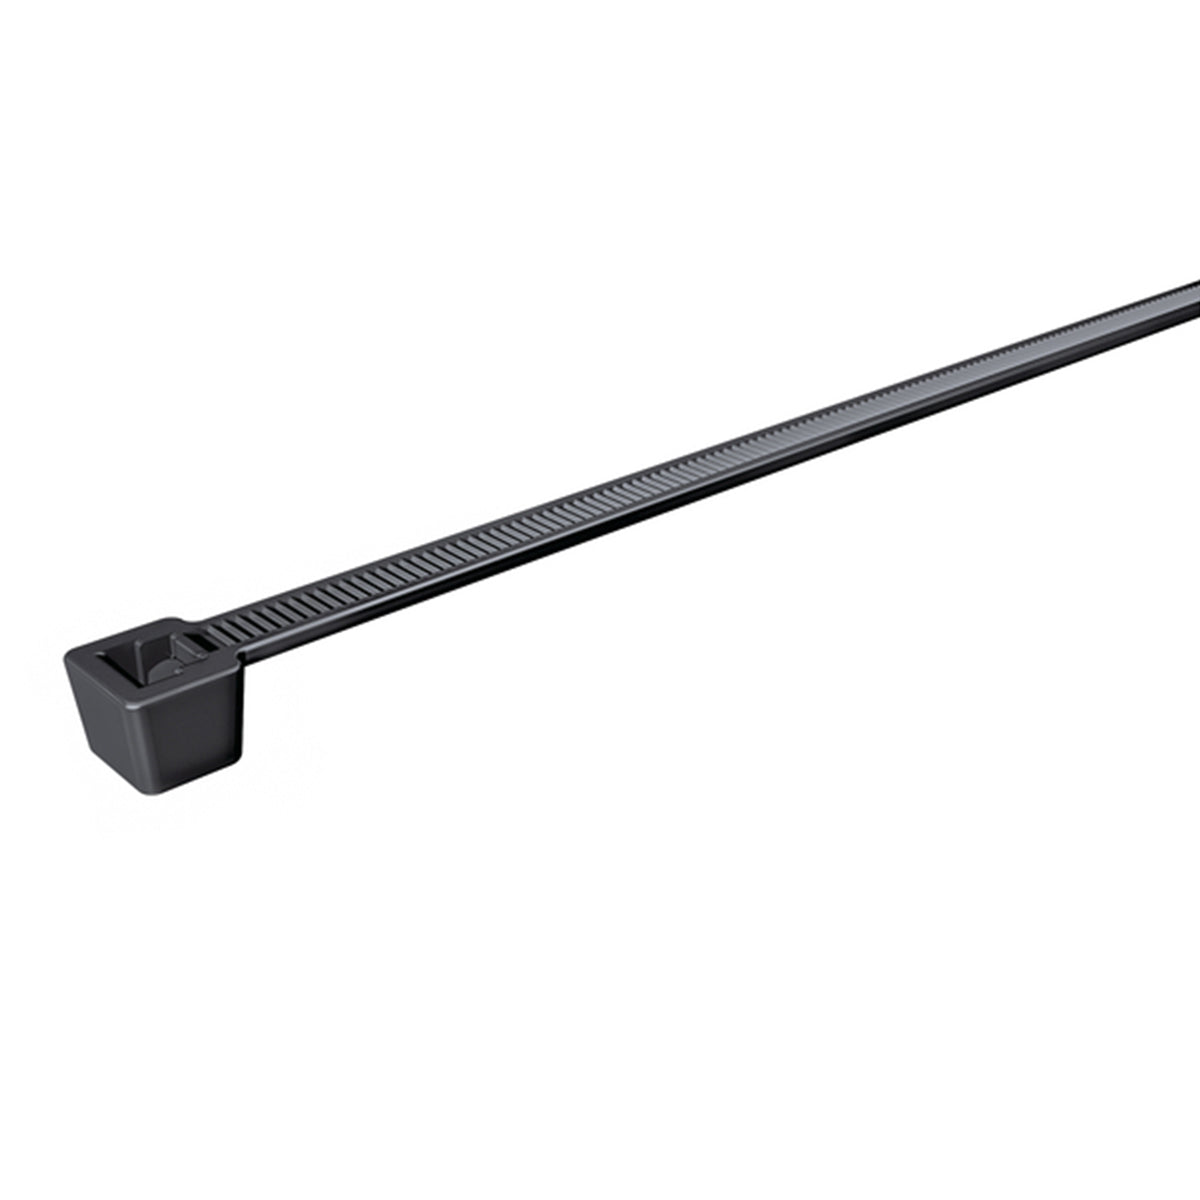 Hellerman Tyton T50R Cable Ties 4.7mm x 198mm Black (Qty: 100)